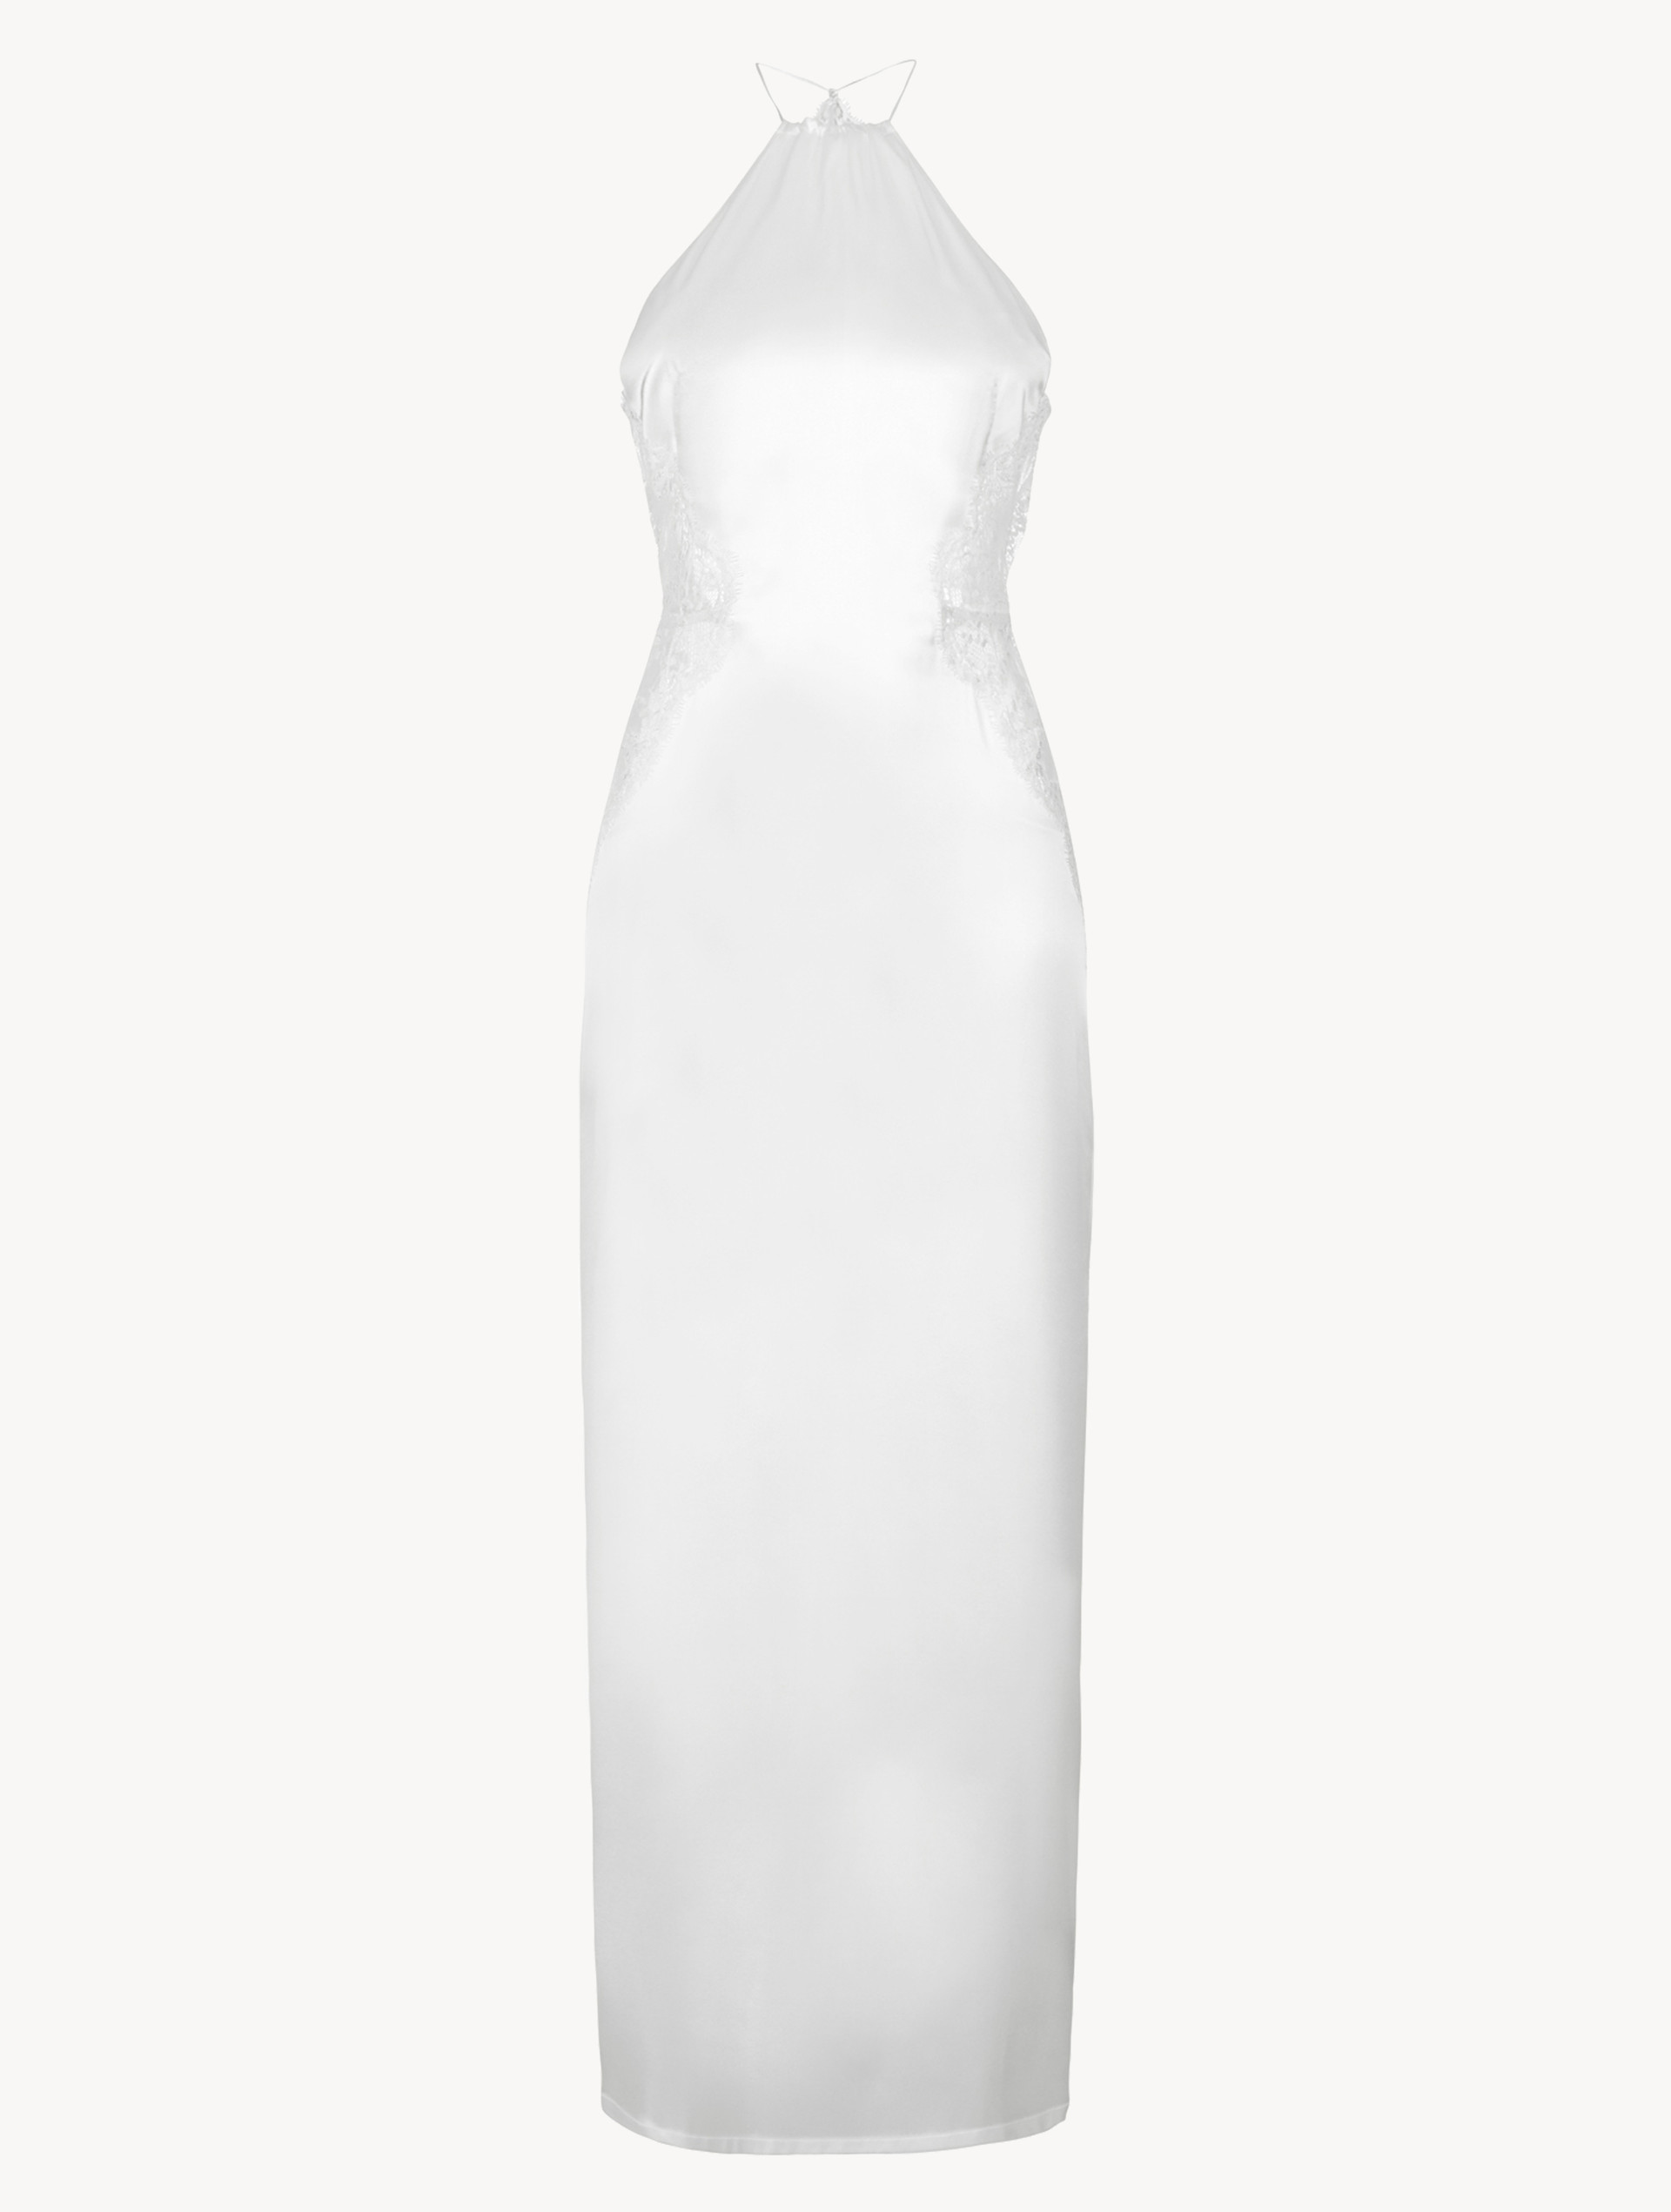 Luxury Silk Halter Nightgown in White Leavers Lace | La Perla